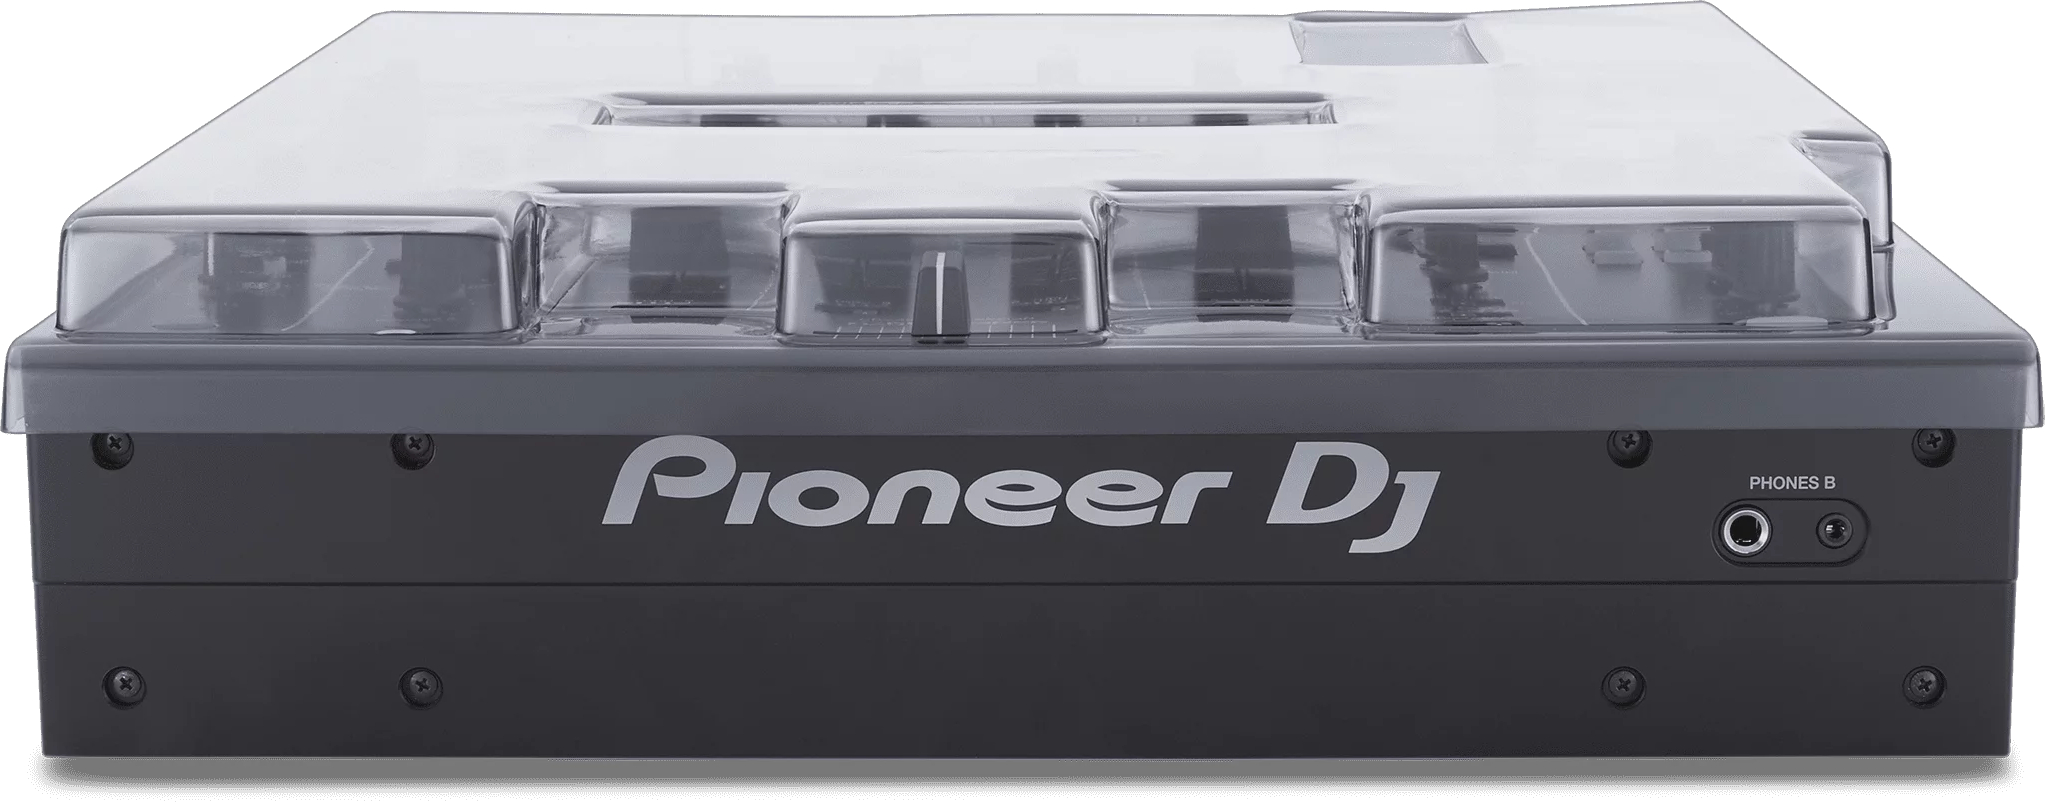 Decksaver Pioneer Dj Djm-a9 Cover - Funda DJ - Variation 2